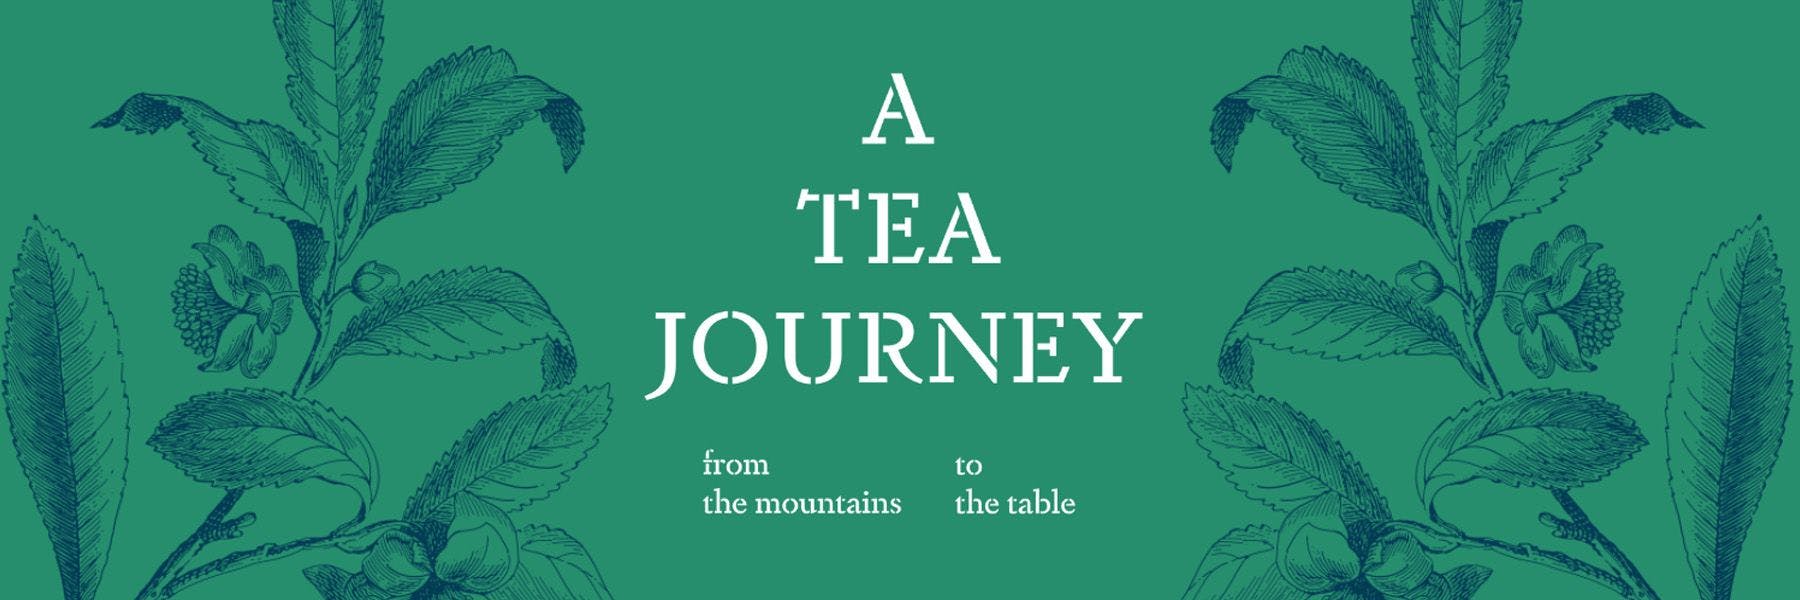 a-tea-journey-featured-image.jpg